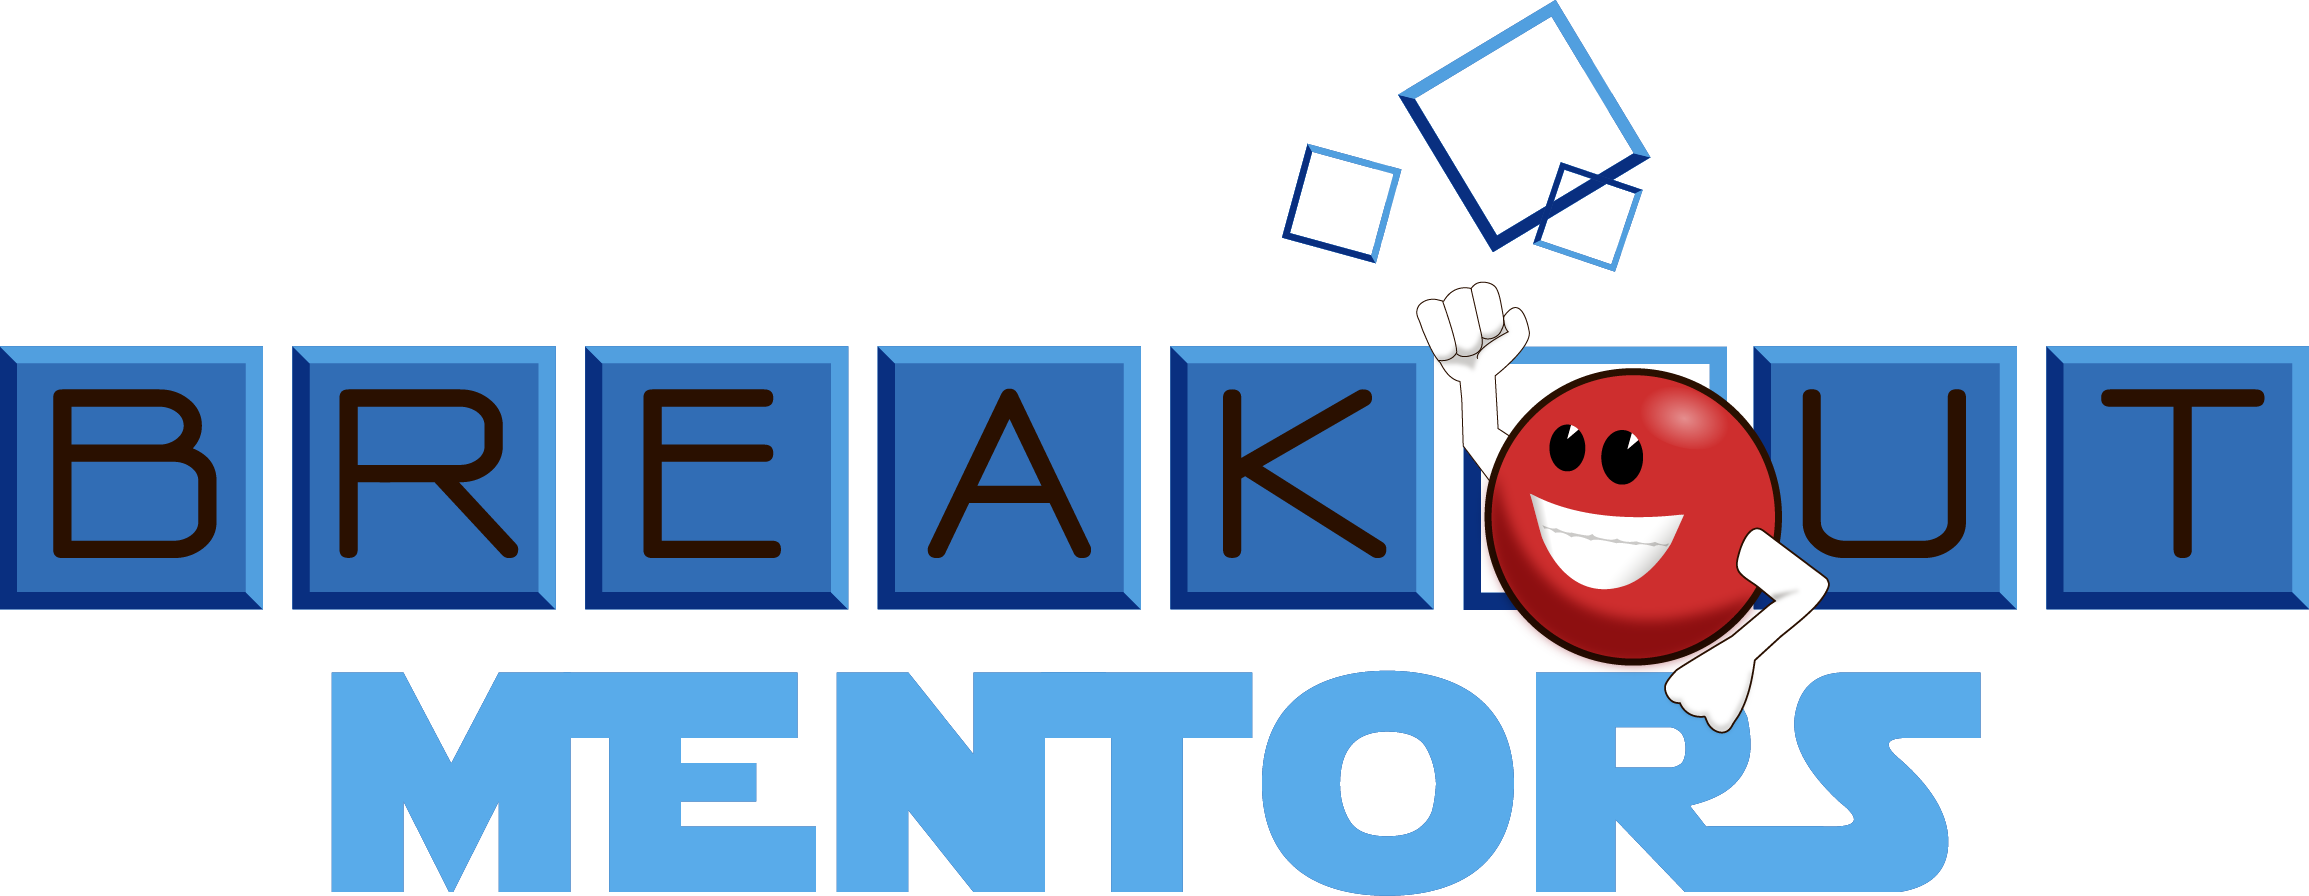 Breakout Mentors